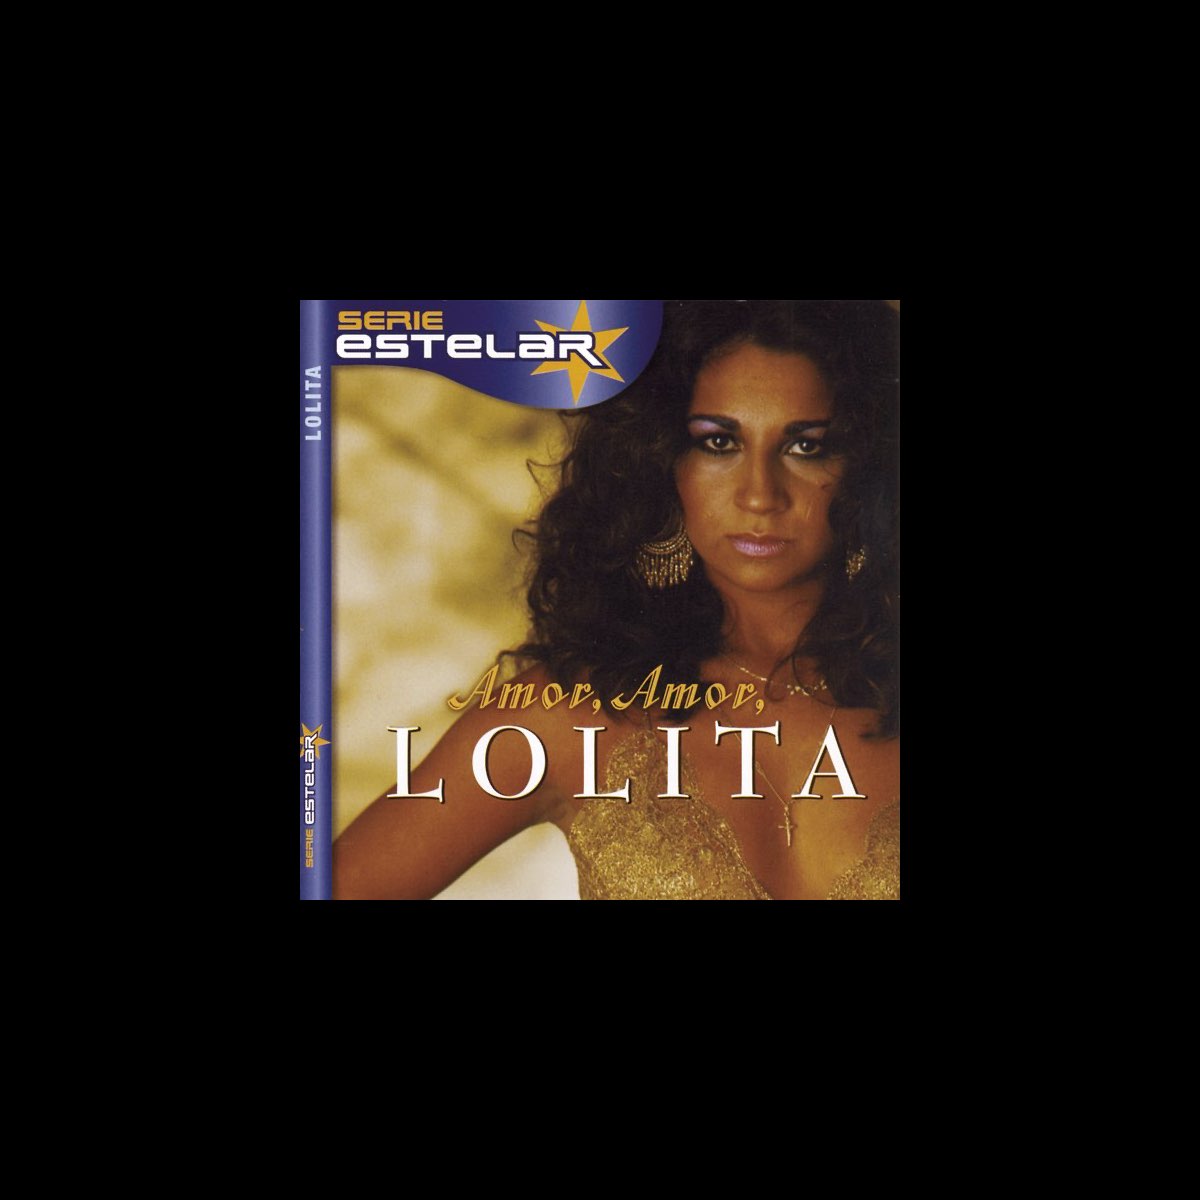 Serie Estelar: Lolita - Amor, Amor by Lolita on Apple Music